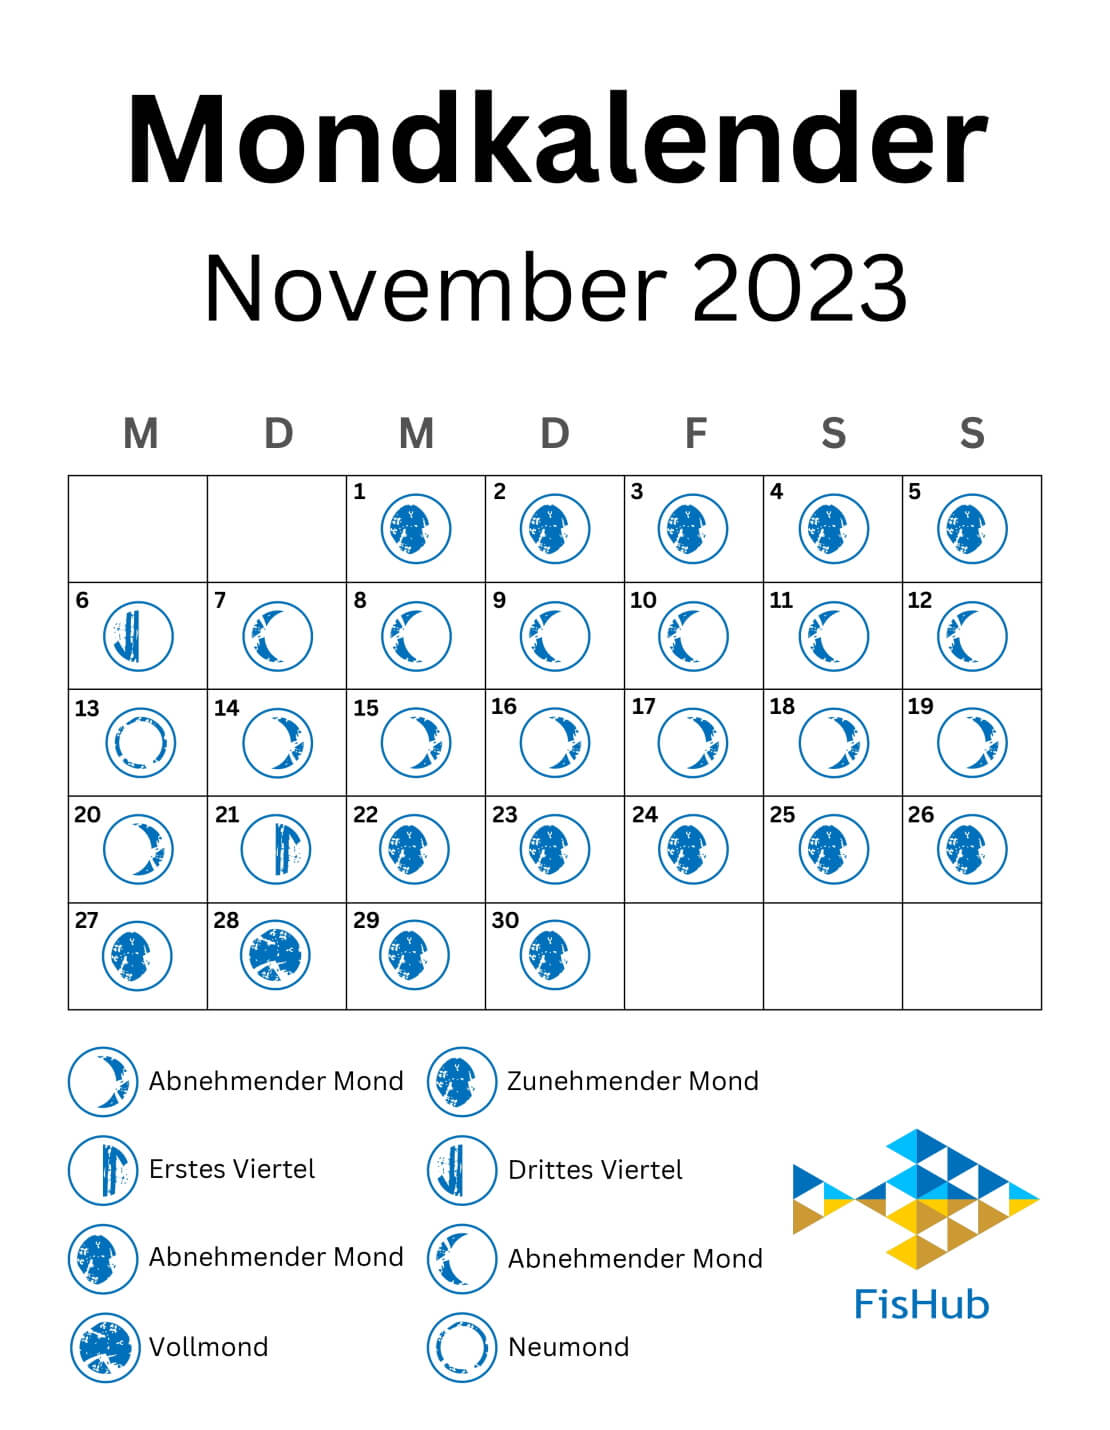 Mondkalender für November 2023